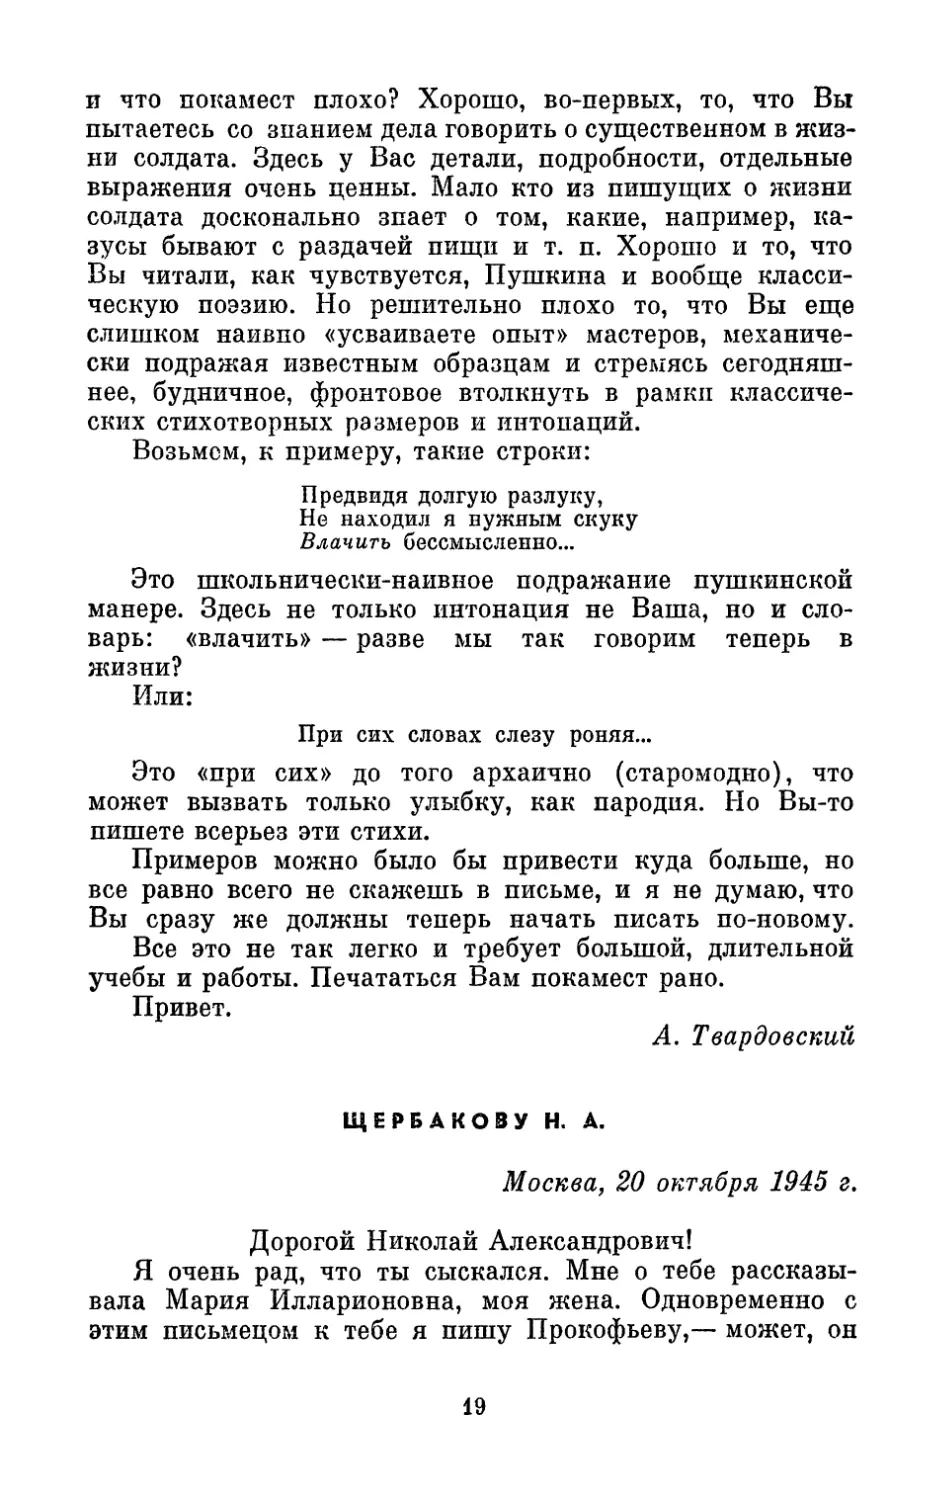 Щербакову Н. А., 20 октября 1945 г.